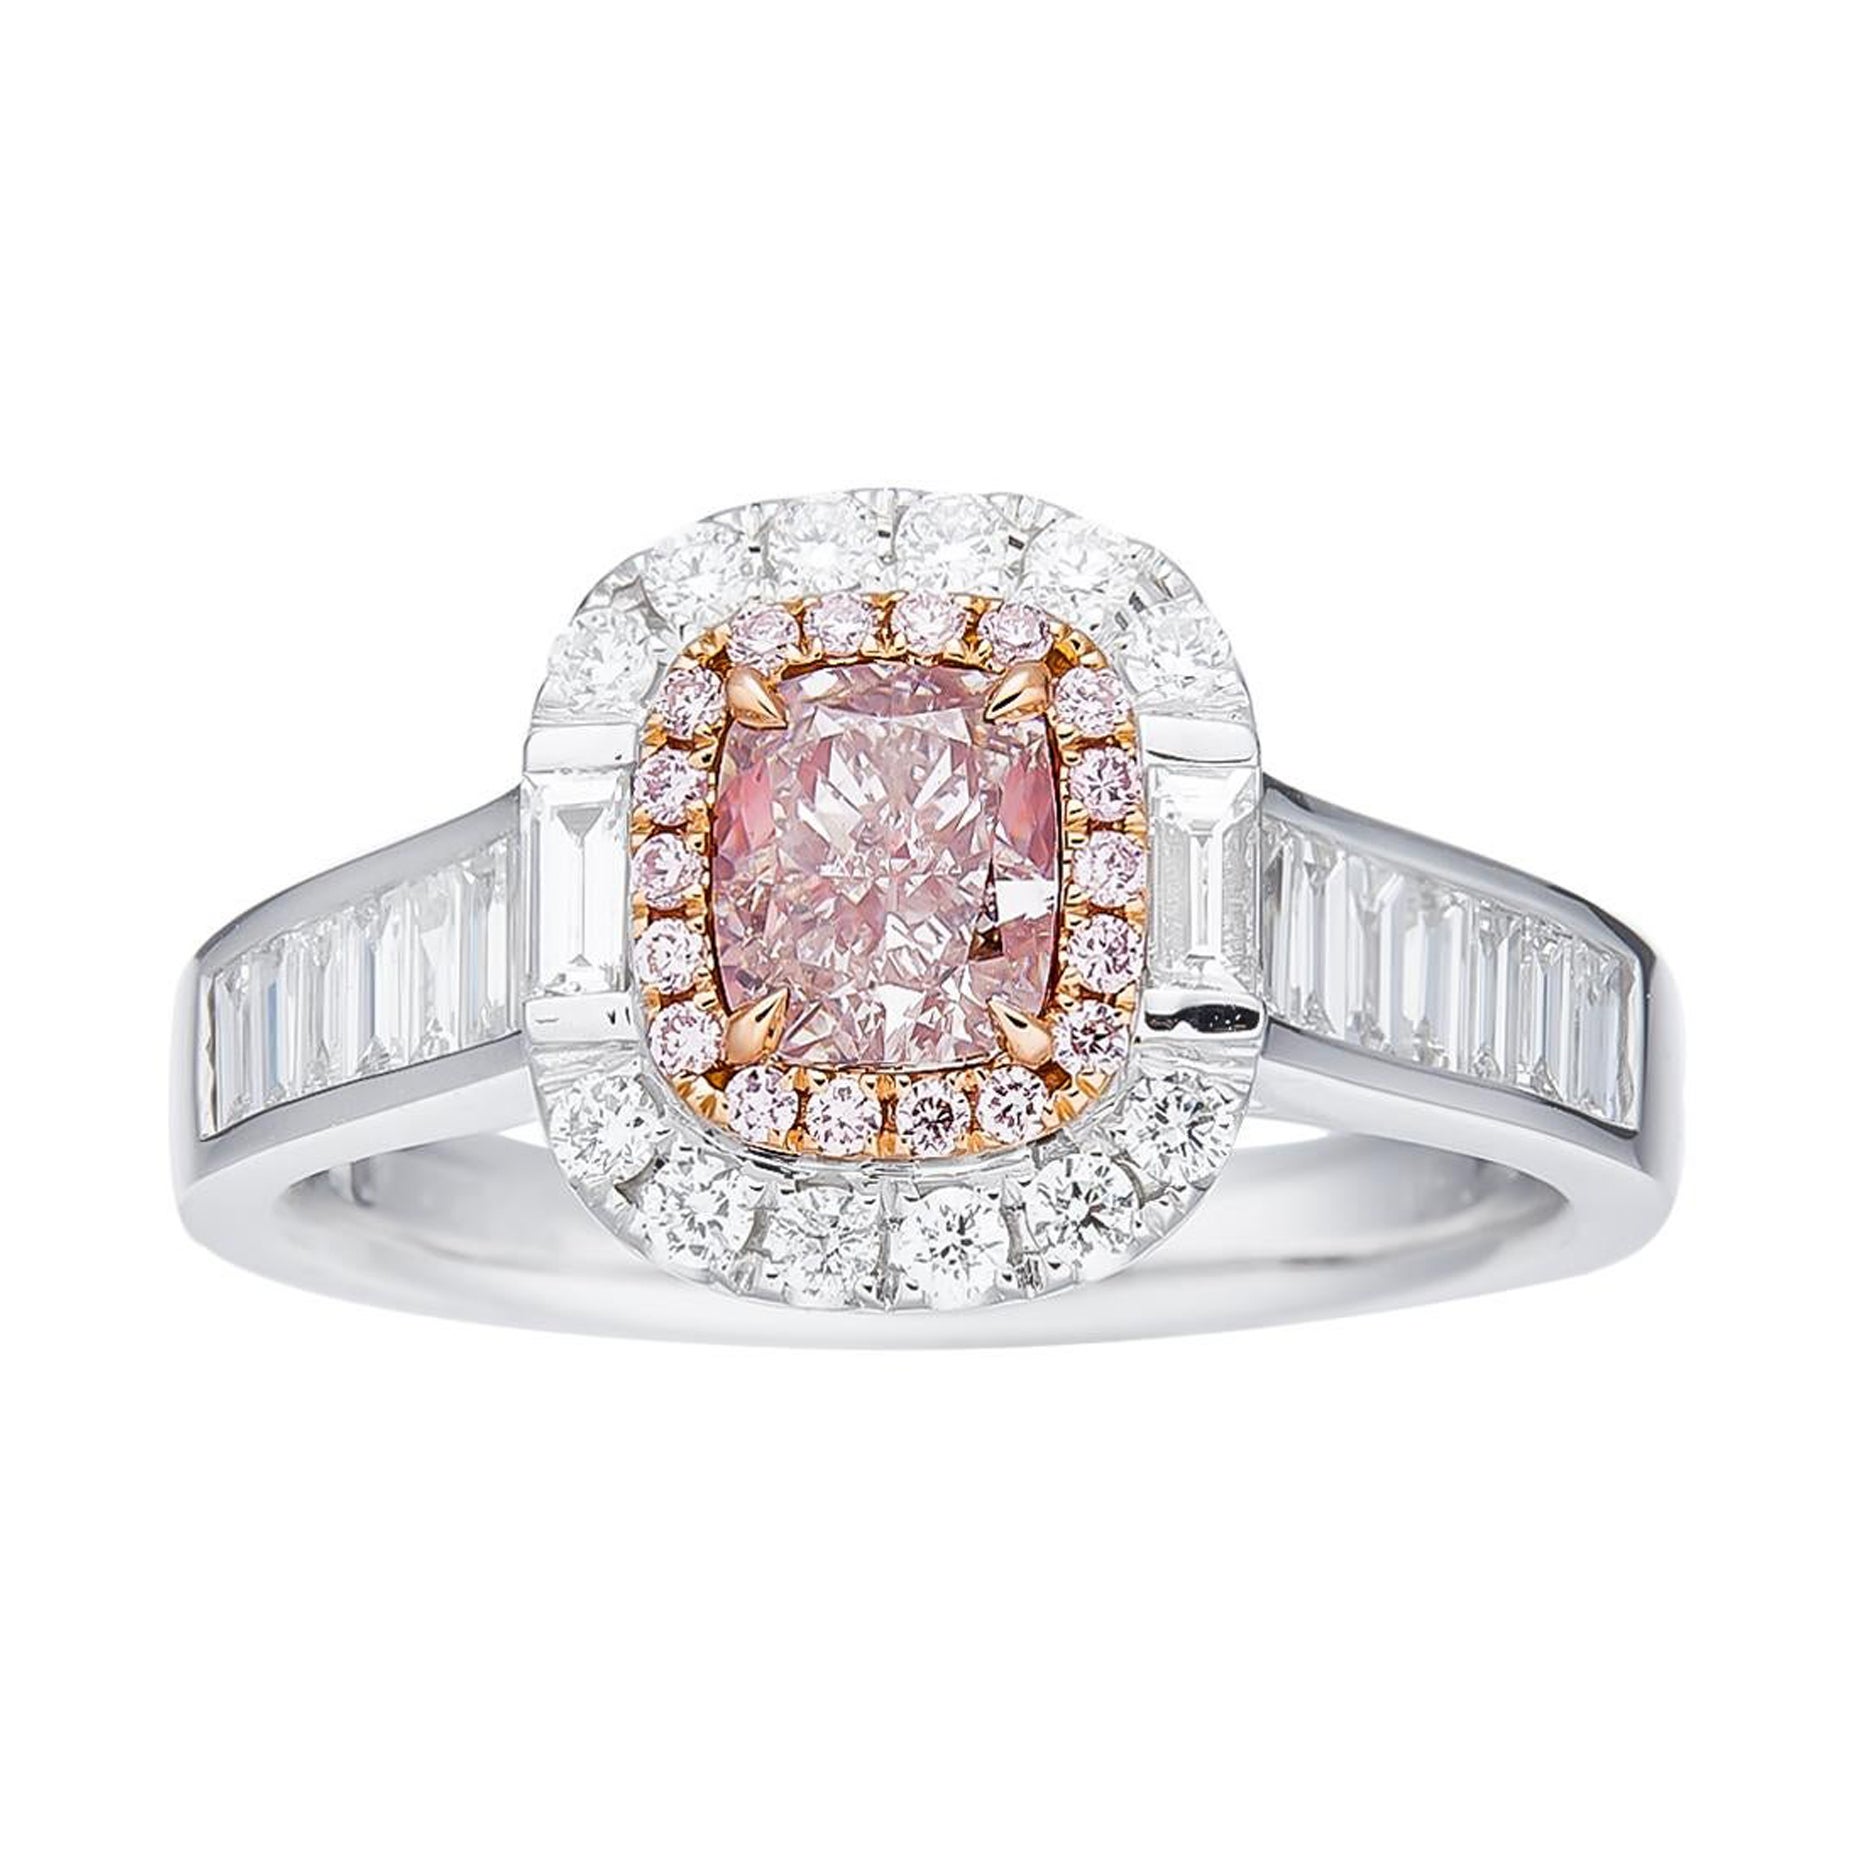 GIA Certified, 0.65ct Fancy Light Pink-Brown Natural Cushion Cut Diamond Ring.